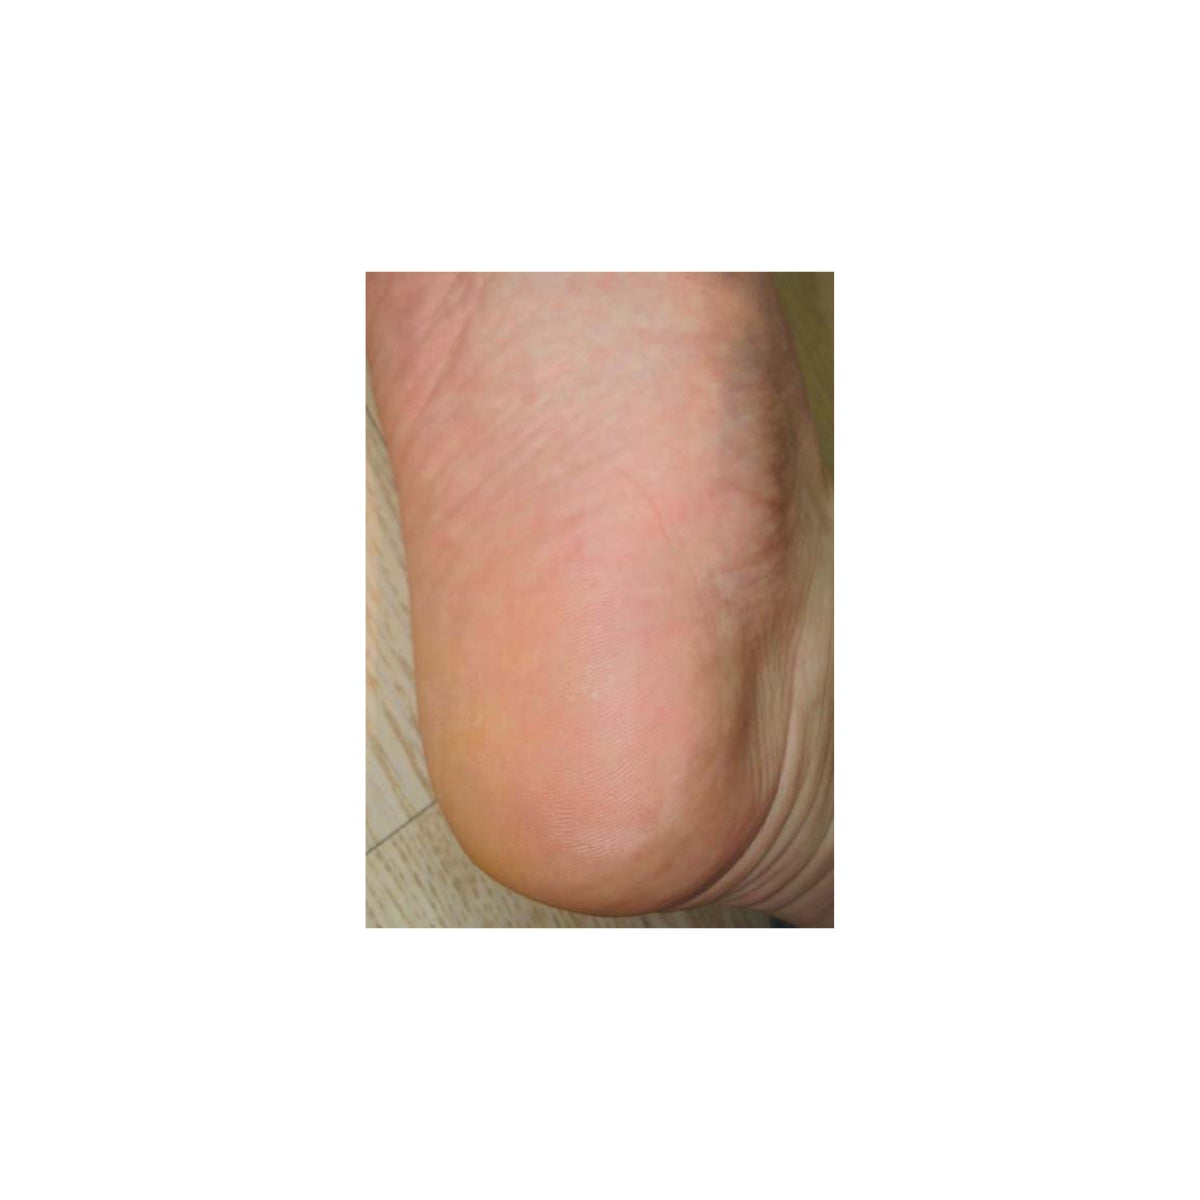 One smooth foot heel image. Baby Foot exfoliating original foot peel Dermal Essentials Medical Grade Skincare